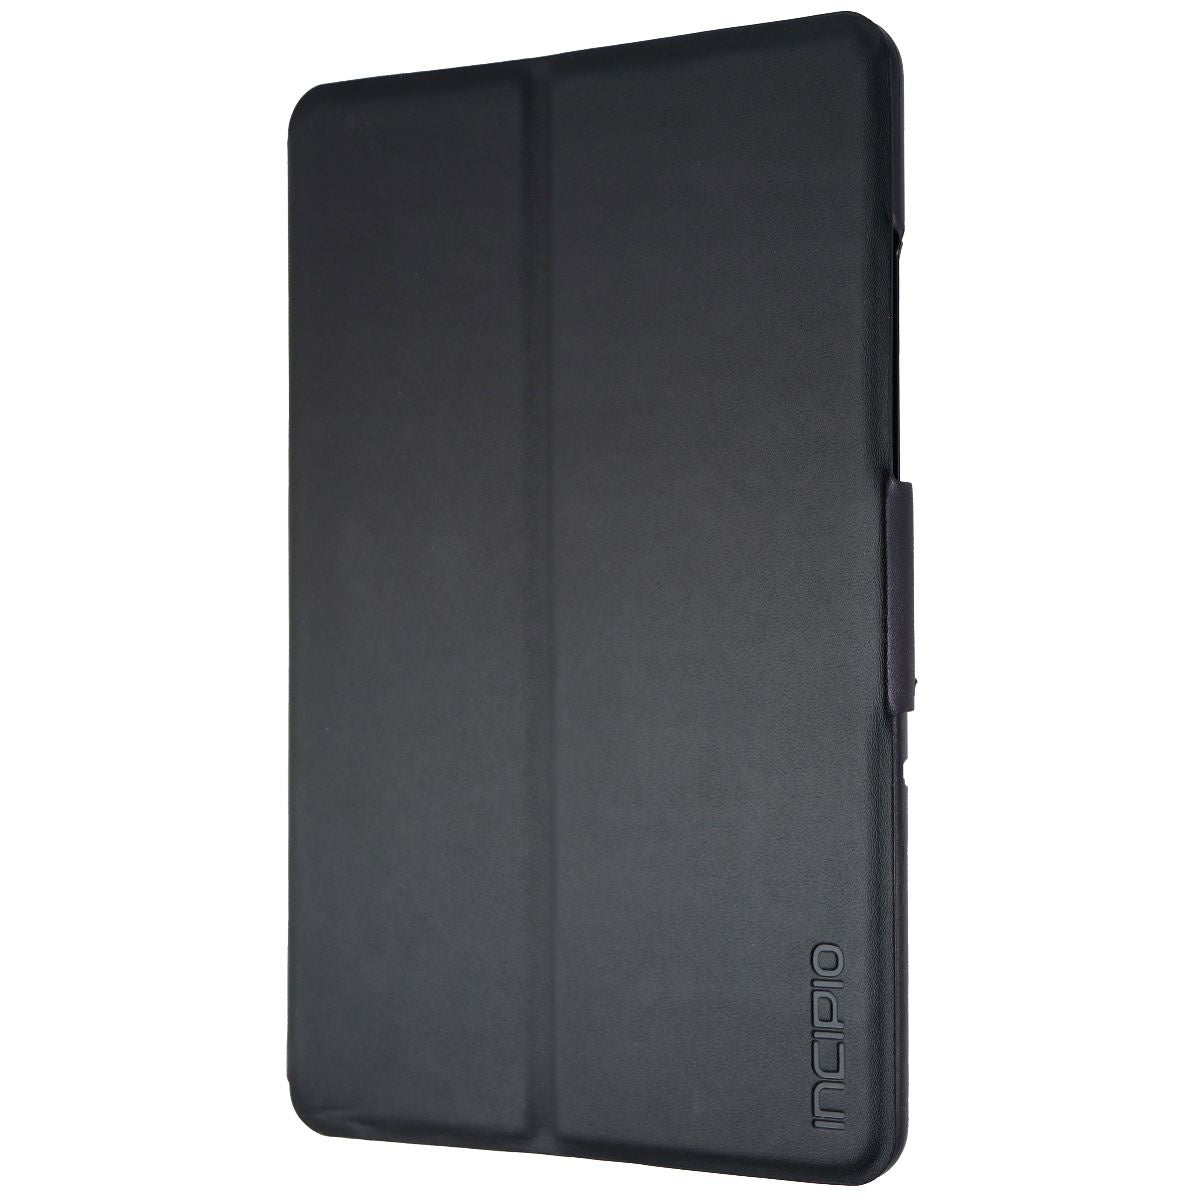 Incipio Lexington Case for ASUS ZenPad Z8s Tablet - Black iPad/Tablet Accessories - Cases, Covers, Keyboard Folios Incipio    - Simple Cell Bulk Wholesale Pricing - USA Seller